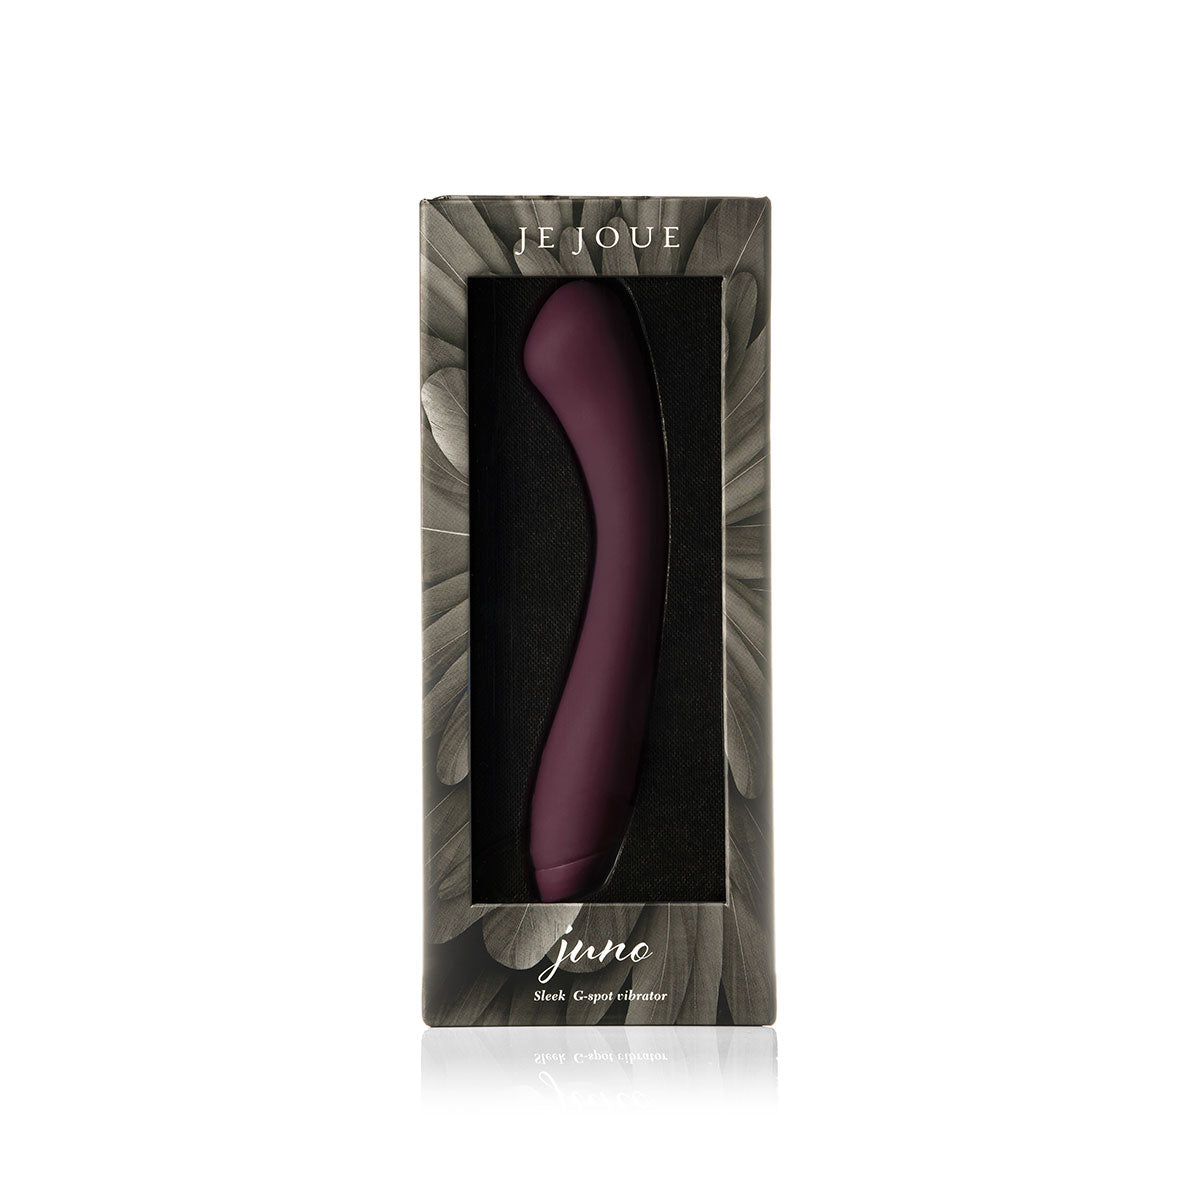 Je Joue Juno G-Spot - Purple Intimates Adult Boutique